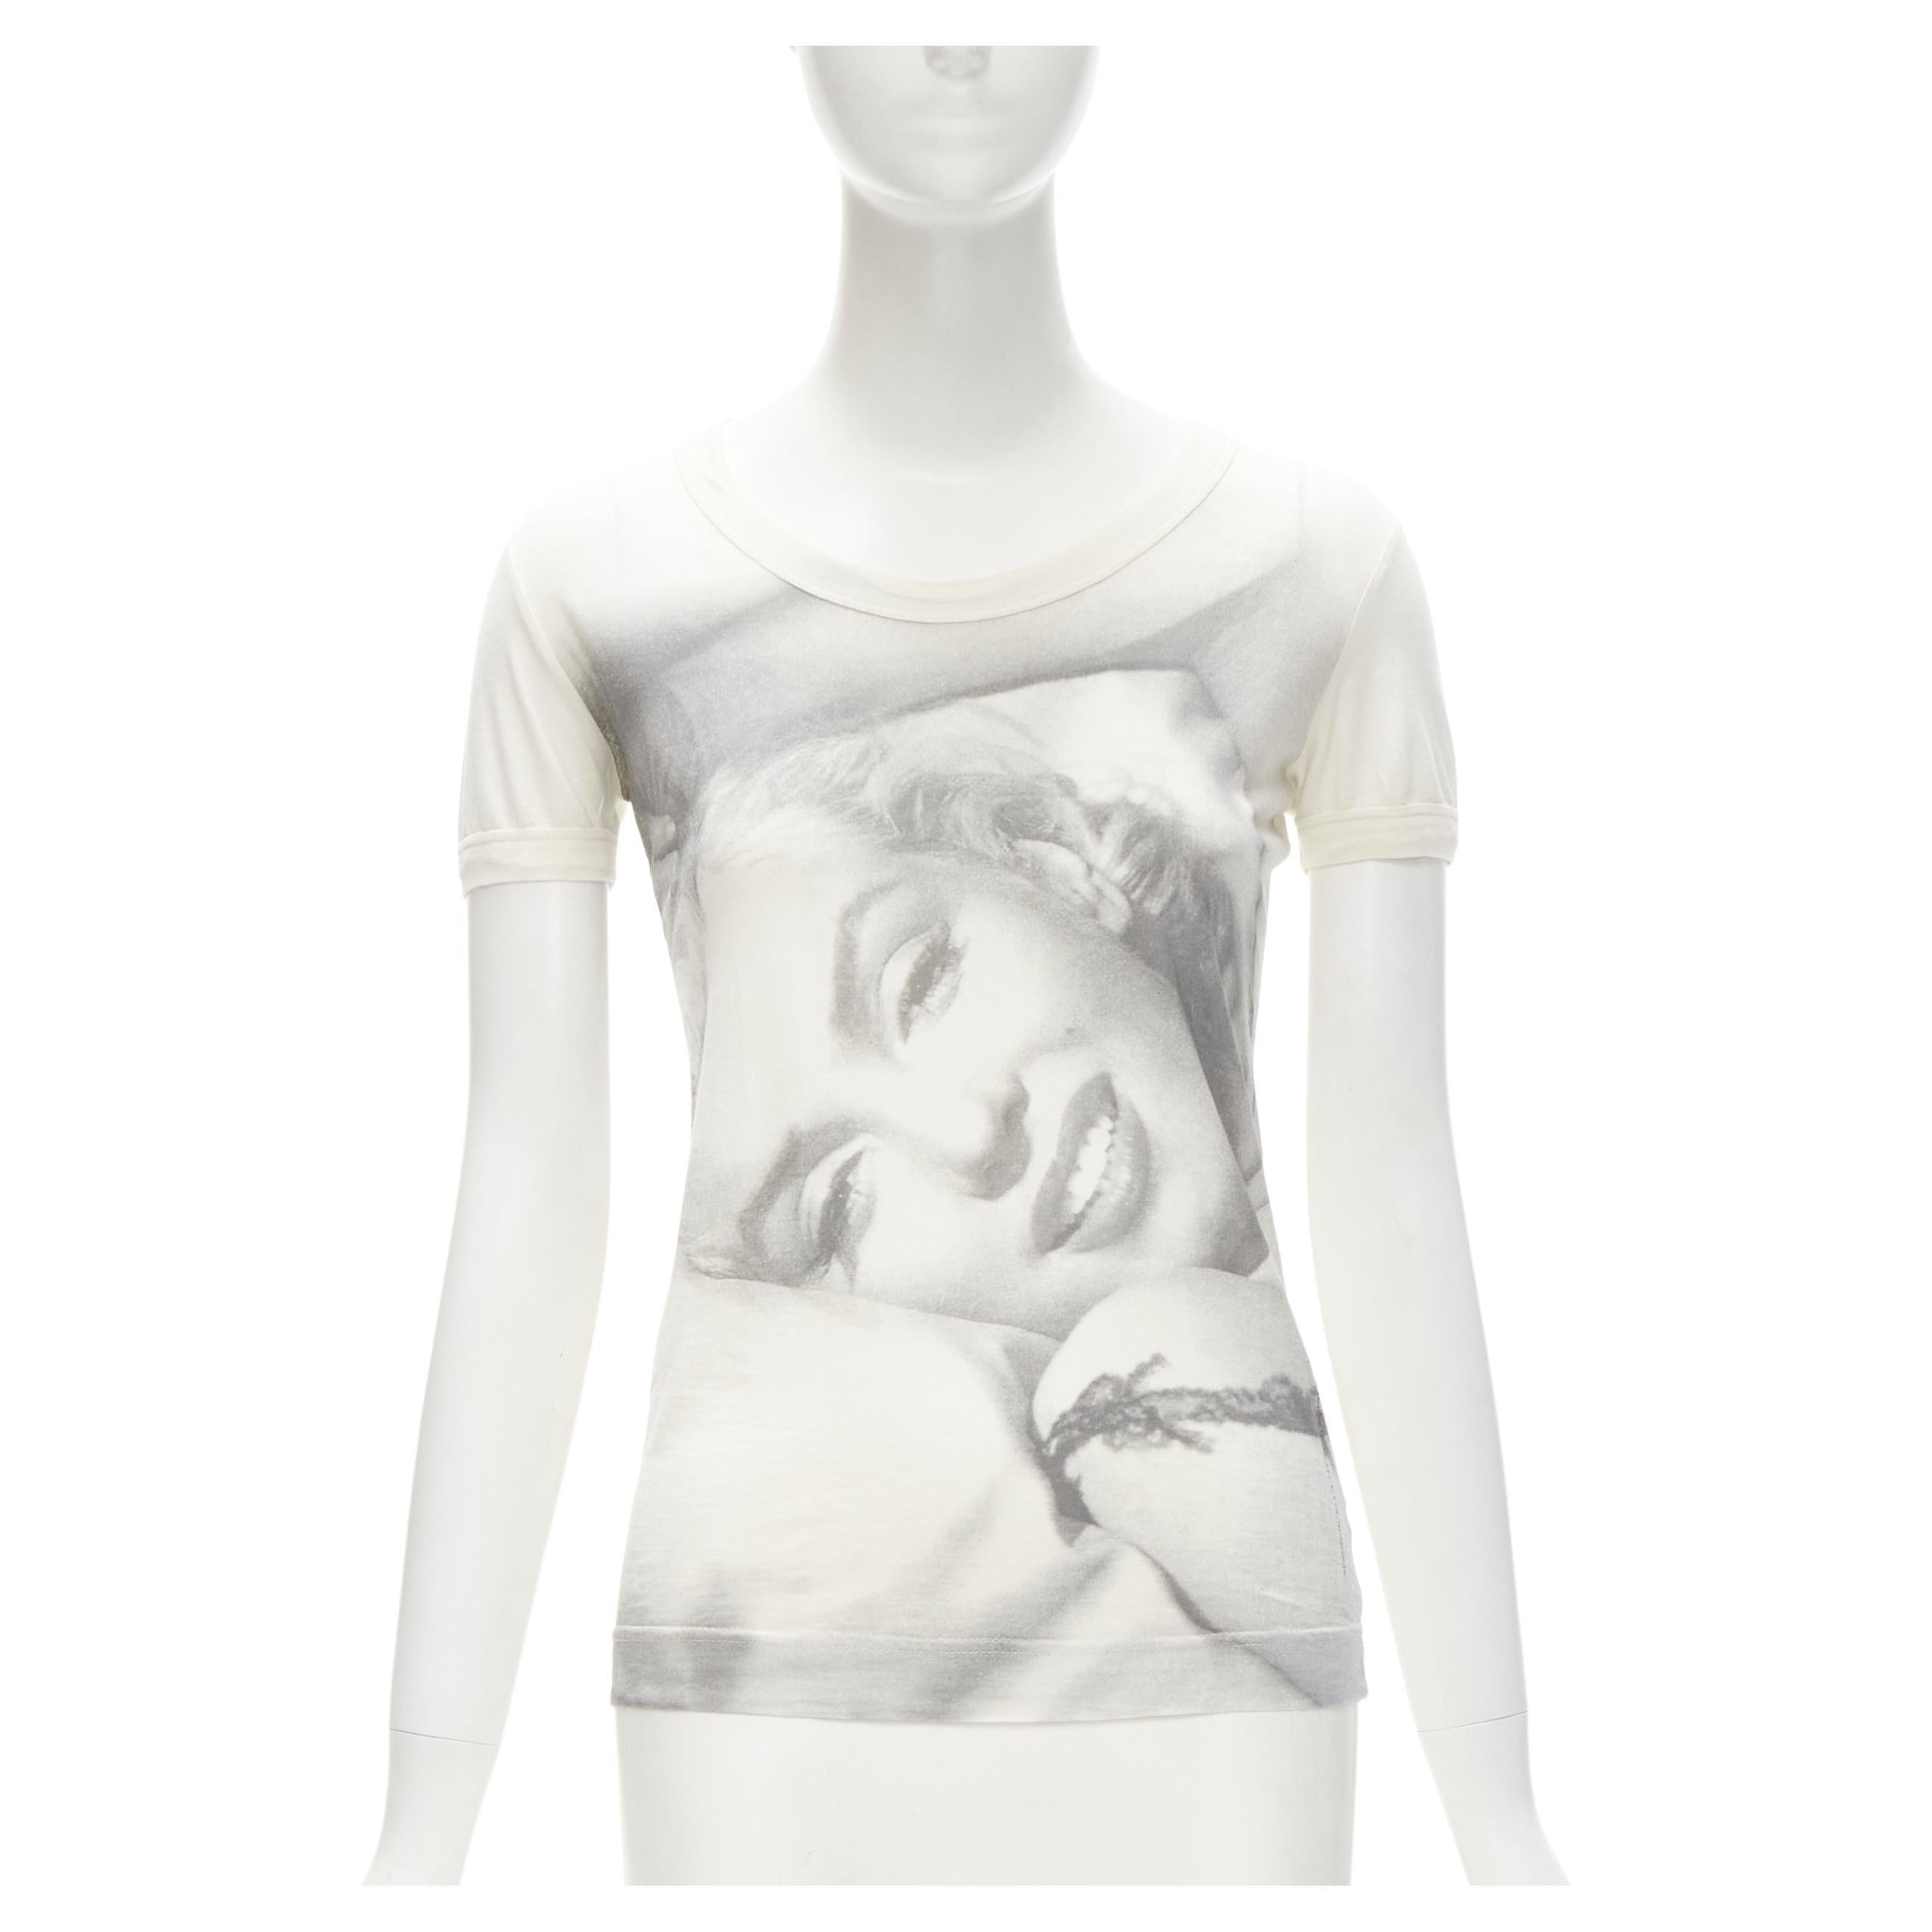 DOLCE GABBANA Vintage Marilyn Monroe Y2K photo print cotton tshirt IT36 XS